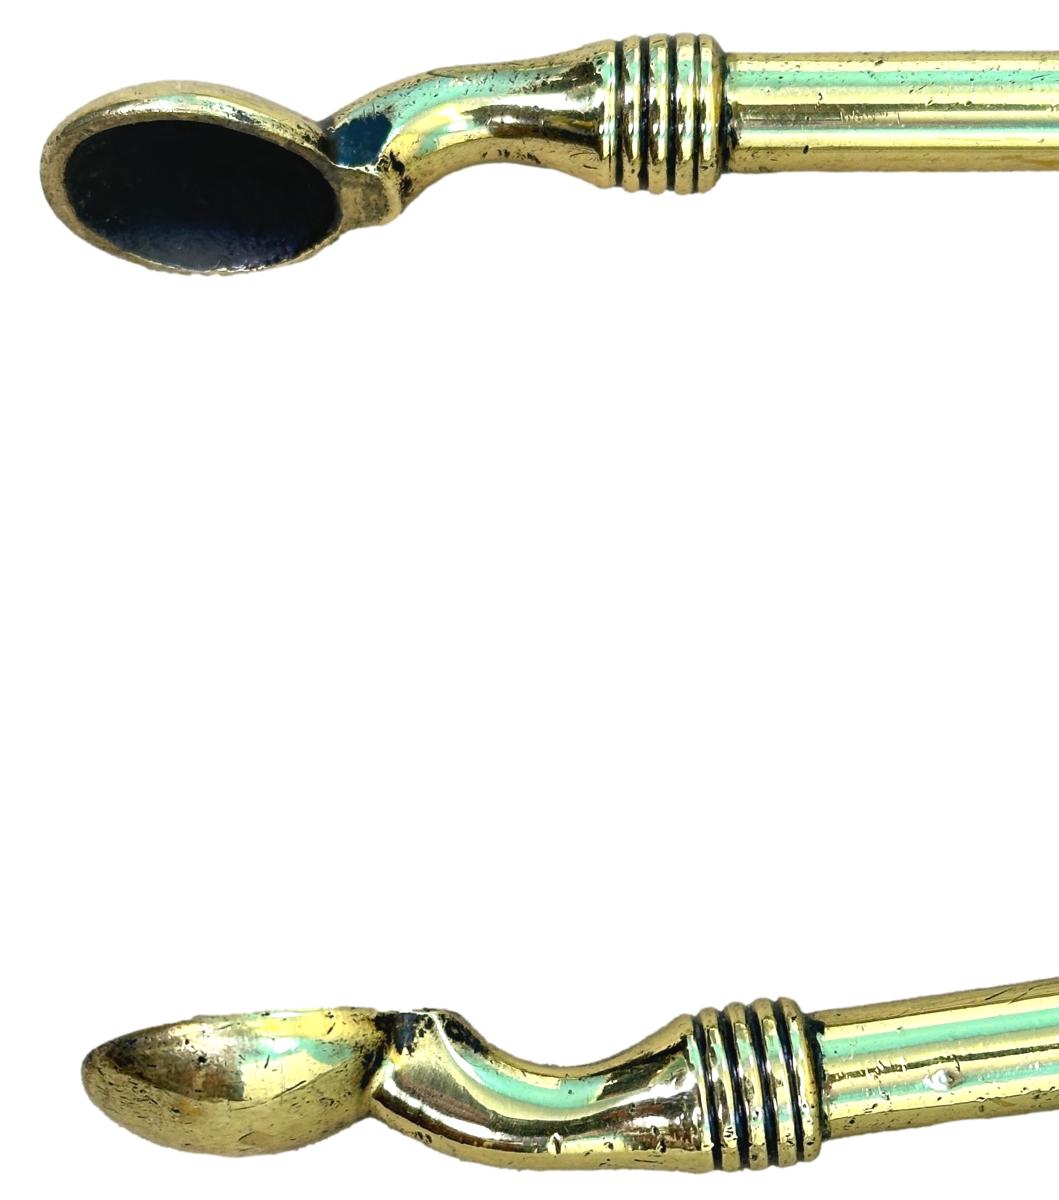 Set Of 19th Century Brass Fire Tools